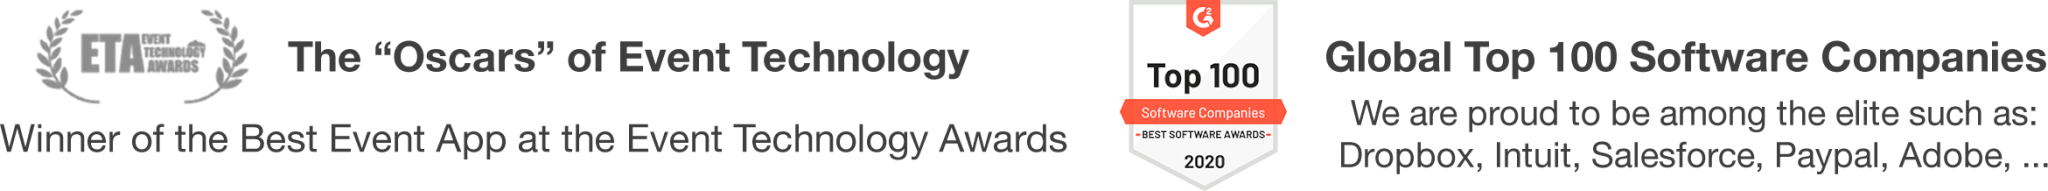 ETA best event app award, Global top 100 software companies